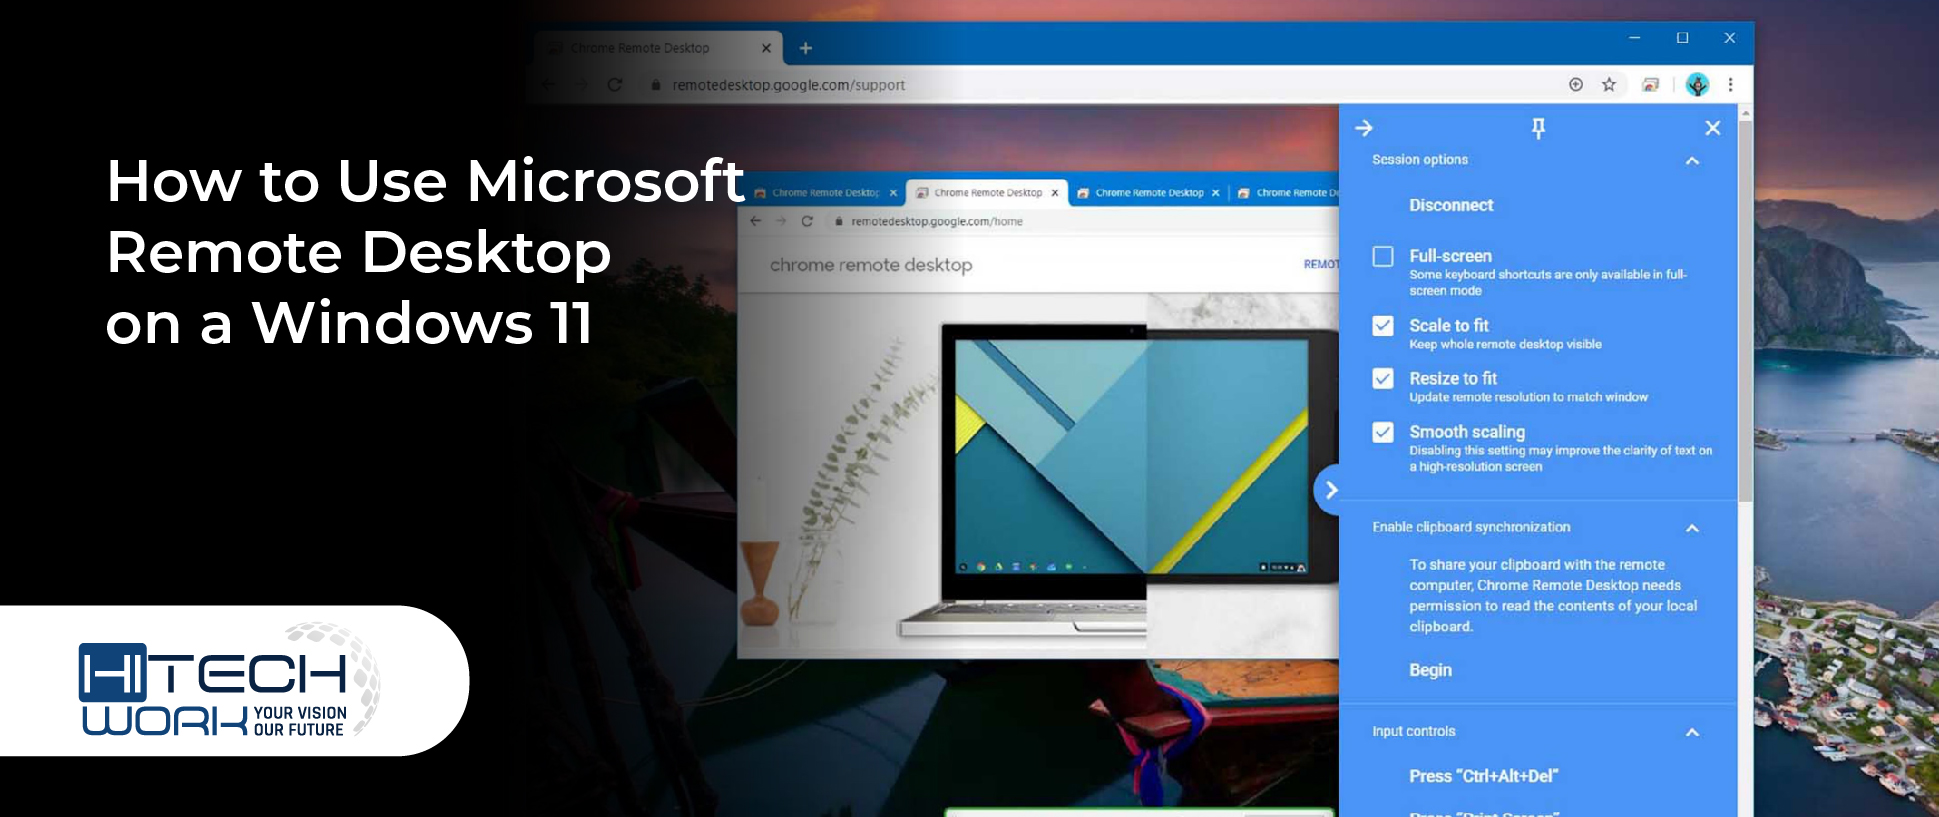 Microsoft Remote Desktop on a Windows 11